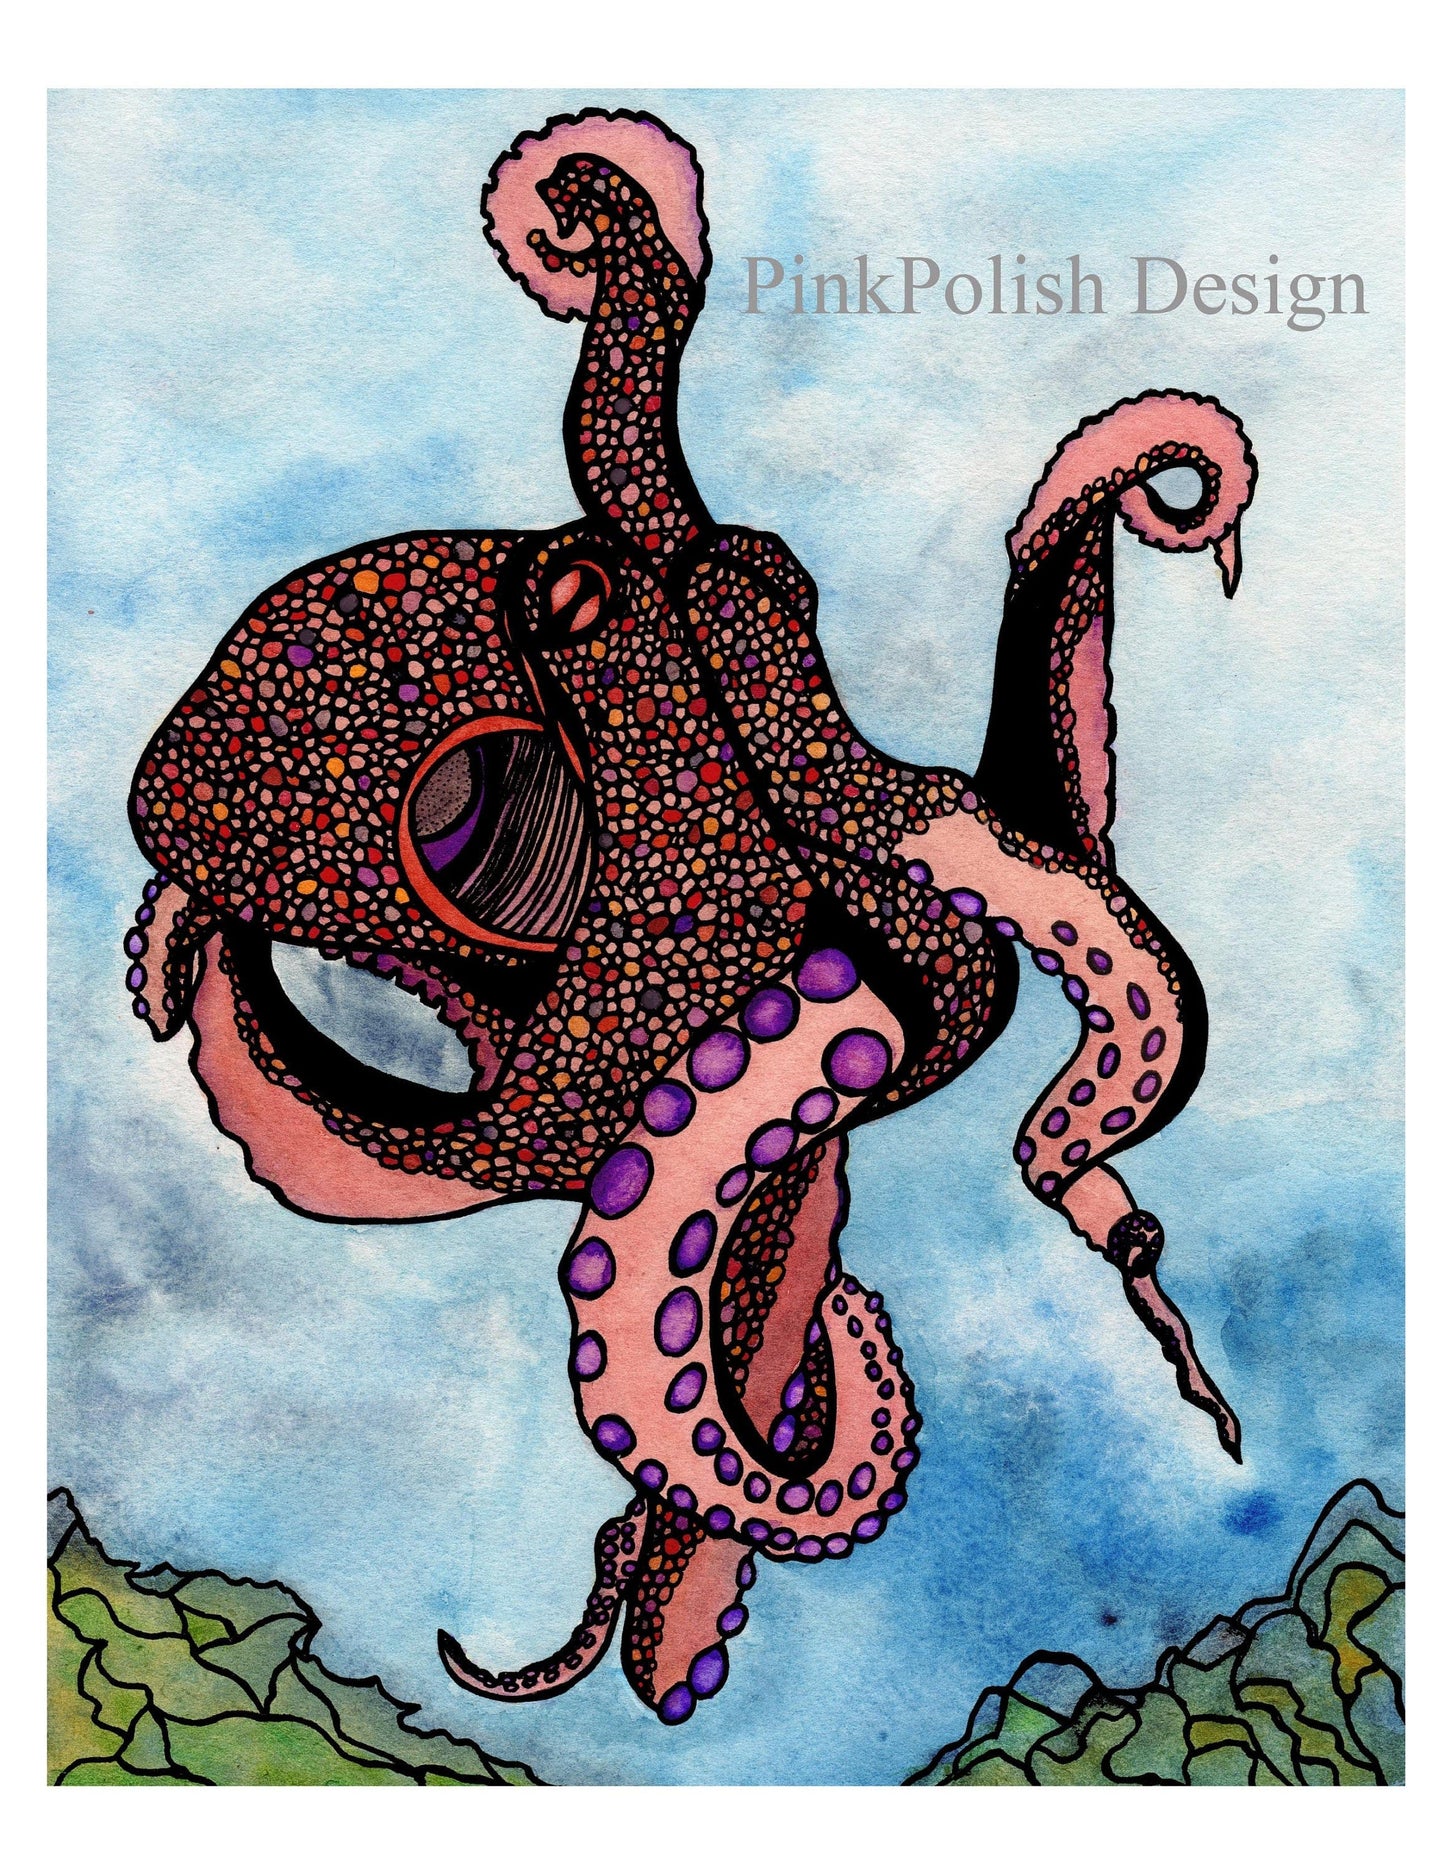 PinkPolish Design Art Prints "Octopus Traveler" Watercolor Painting: Art Print